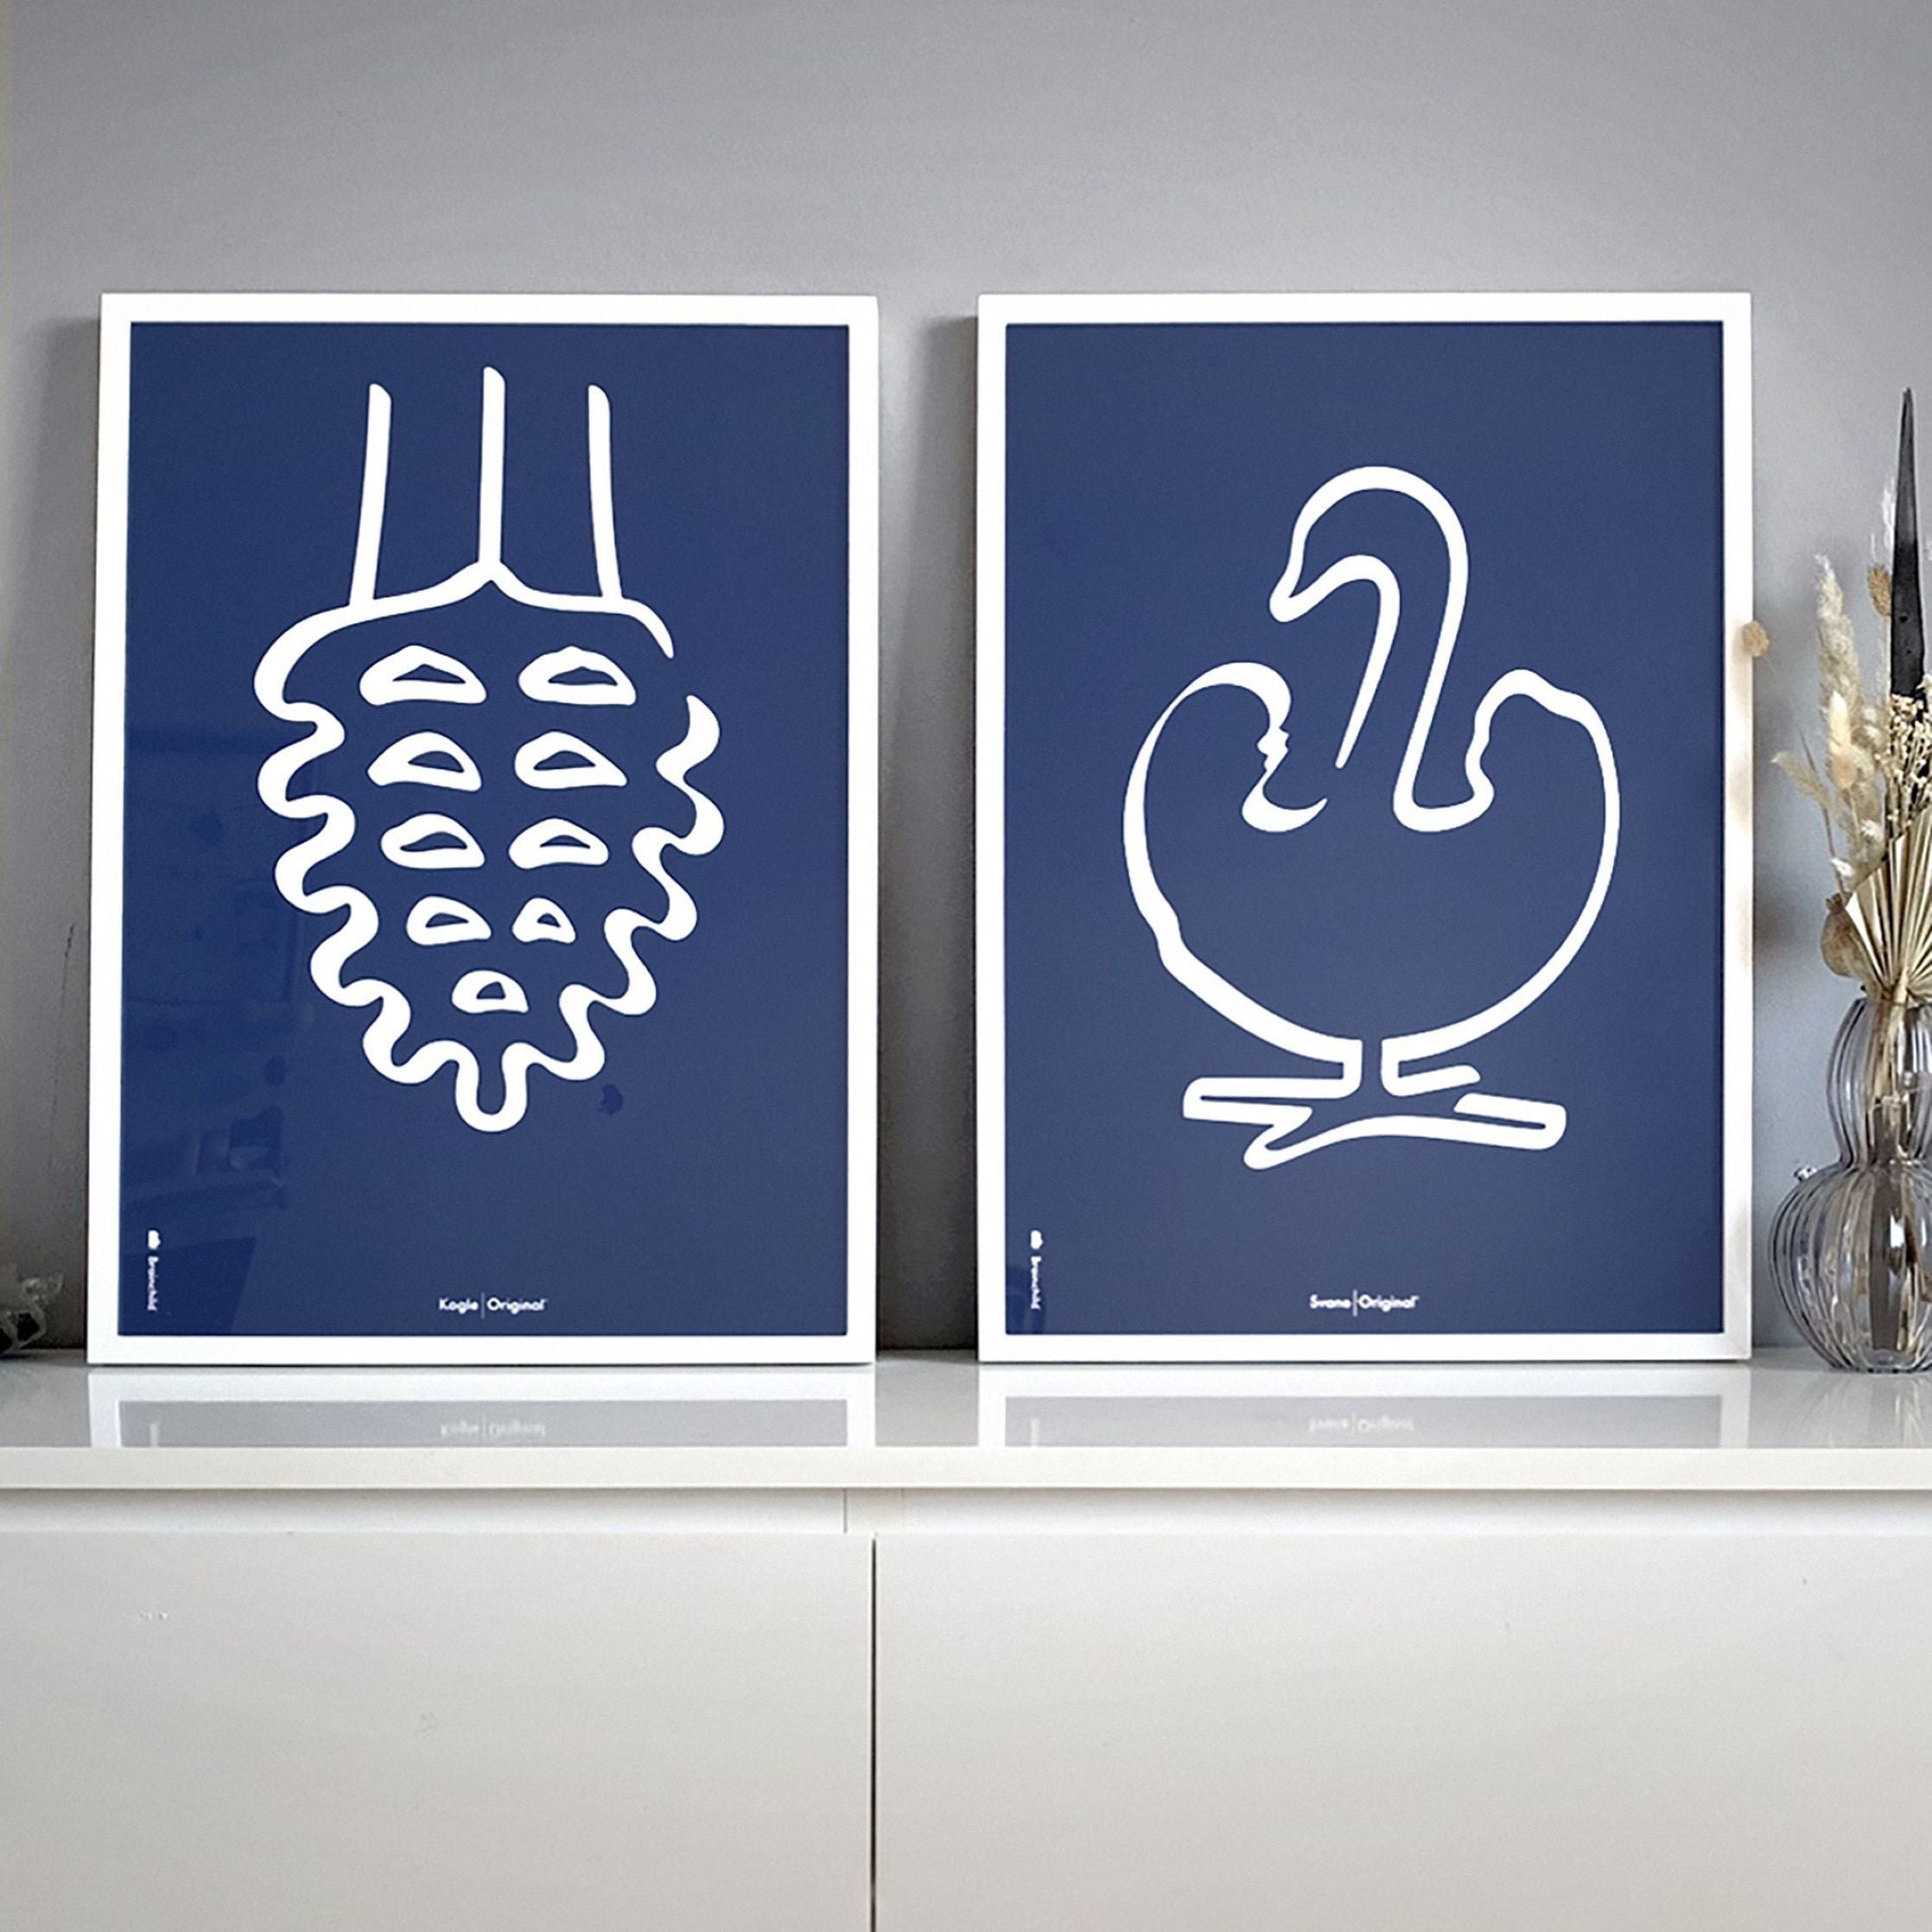 Brainchild Swan Line Poster, Frame Made Of Light Wood 70 X100 Cm, Blue Background